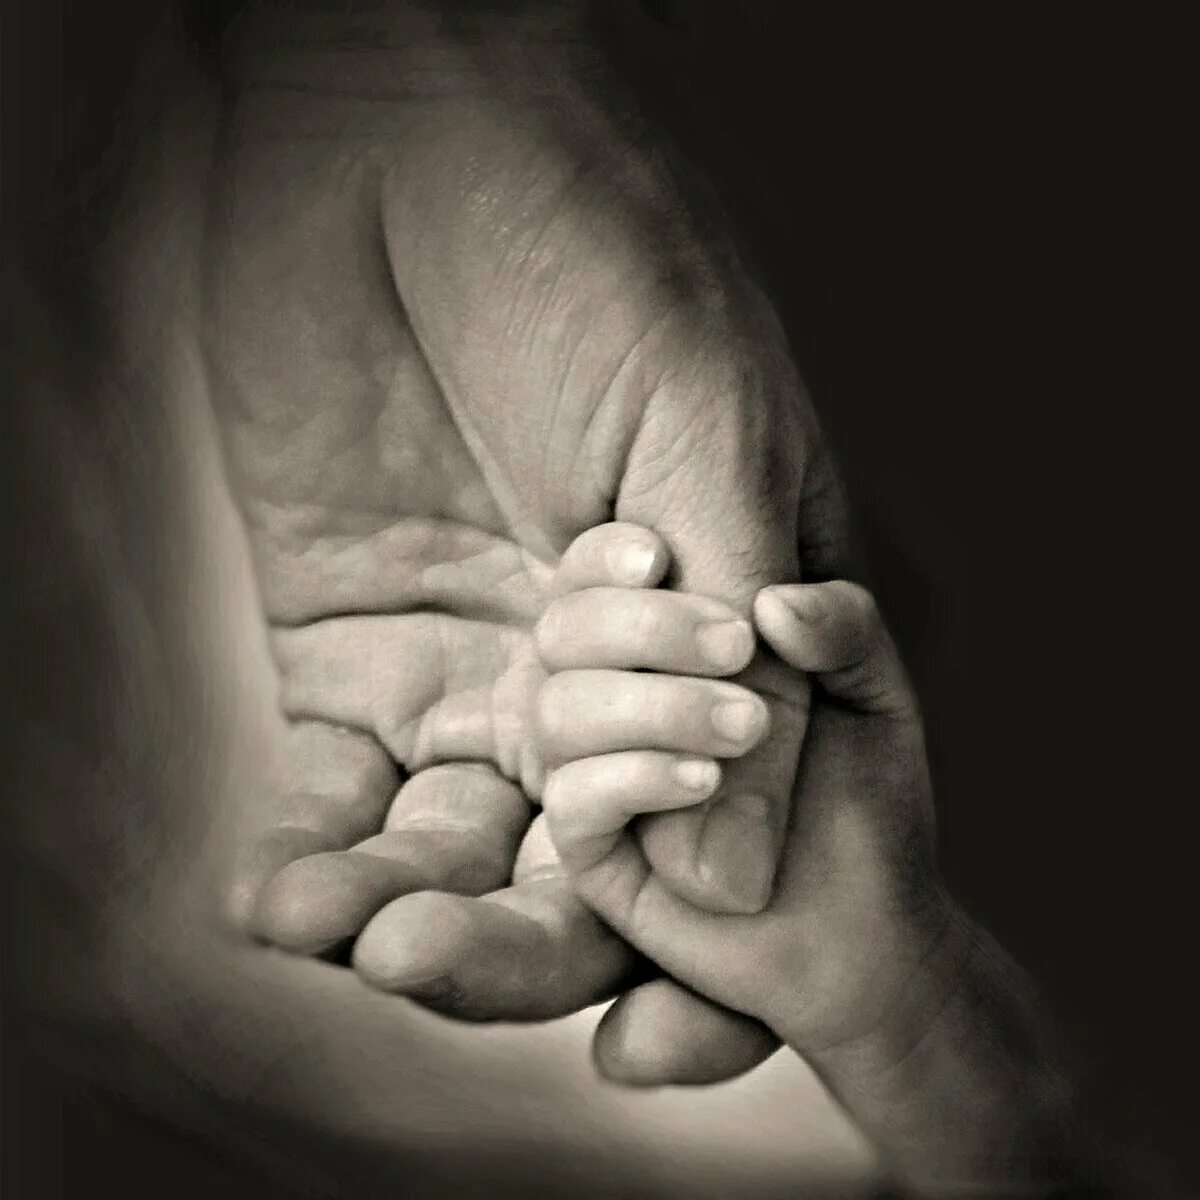 Руки отца. Детская рука в руке. Мужская и детская рука. Рука отца и сына.